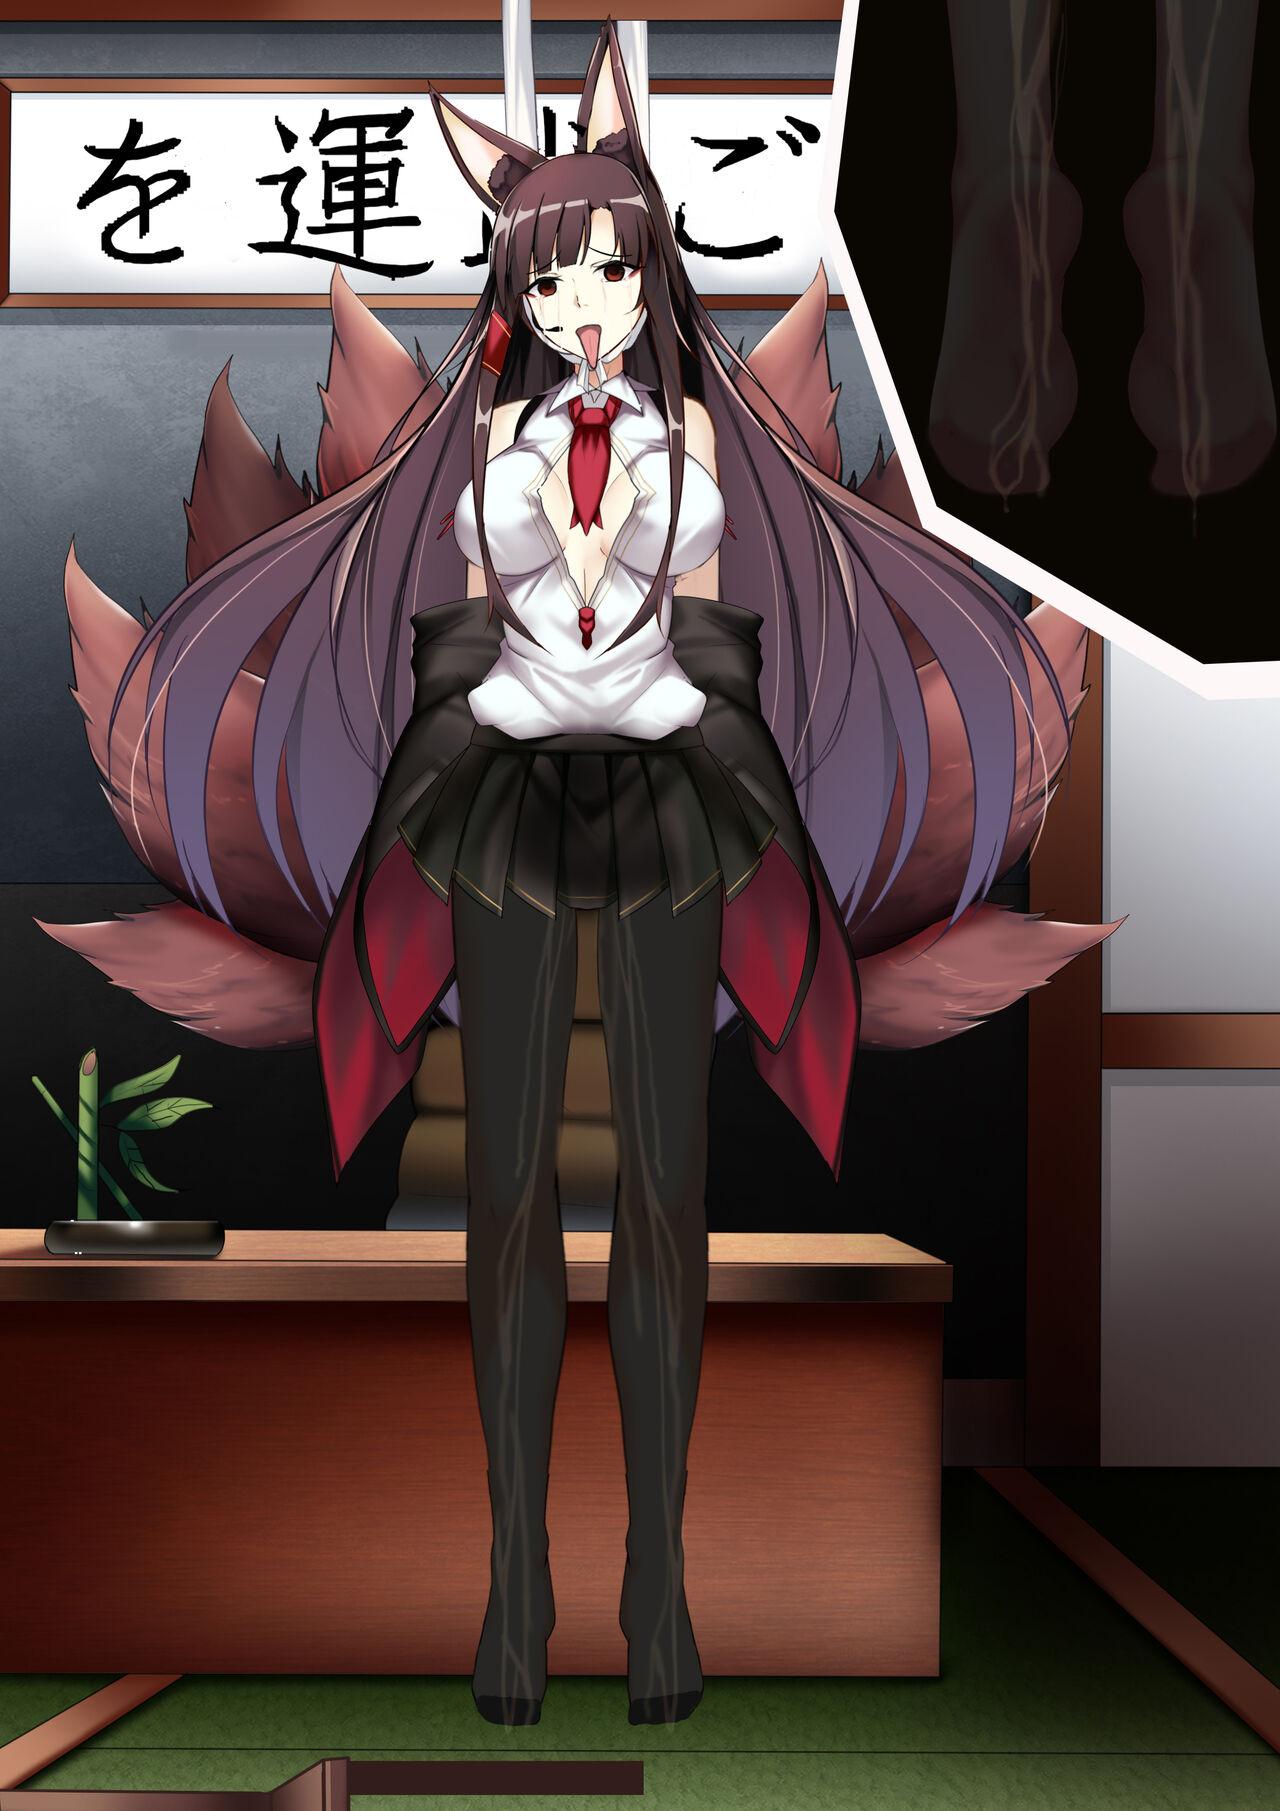 Akagi hanged herself in her office 45